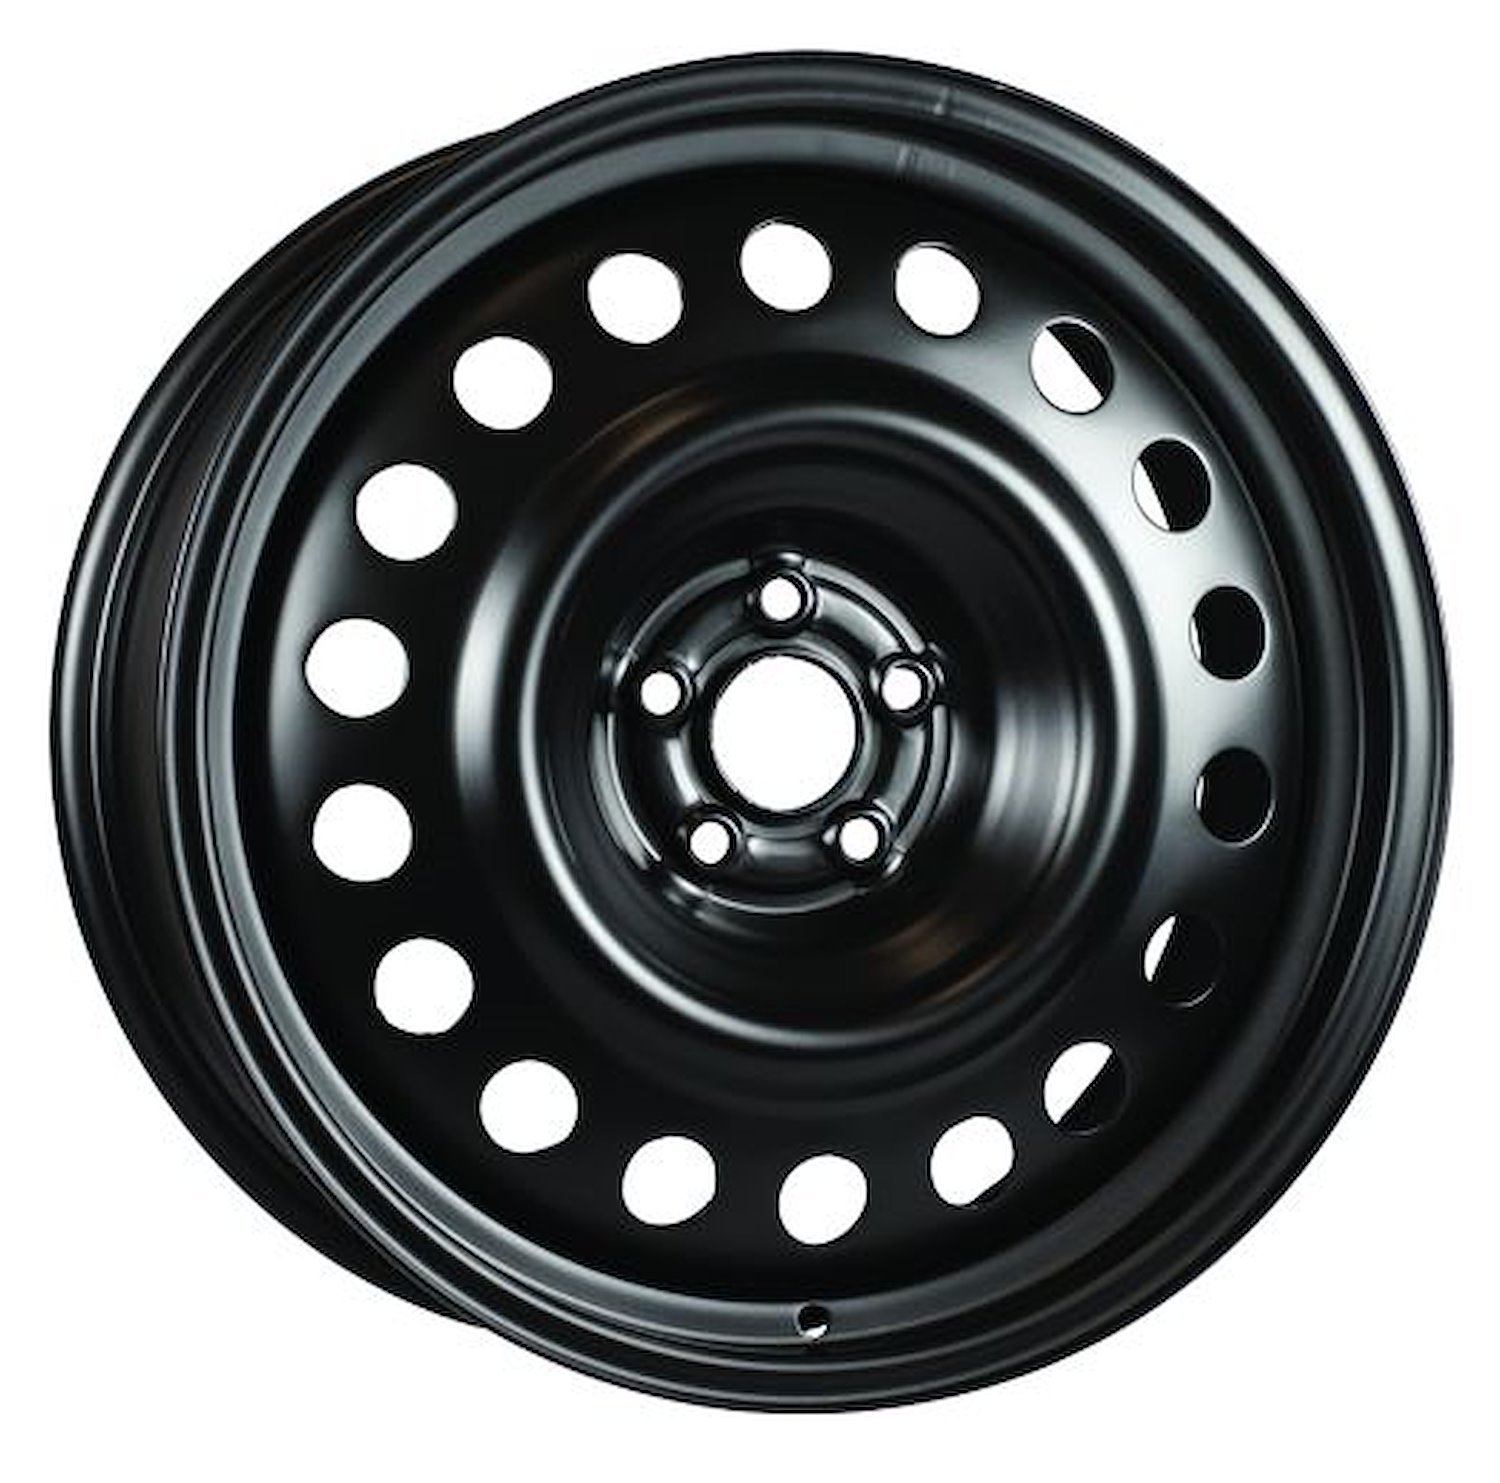 X48500 Steel Wheel [Size: 18" x 7.50"] Black Finish